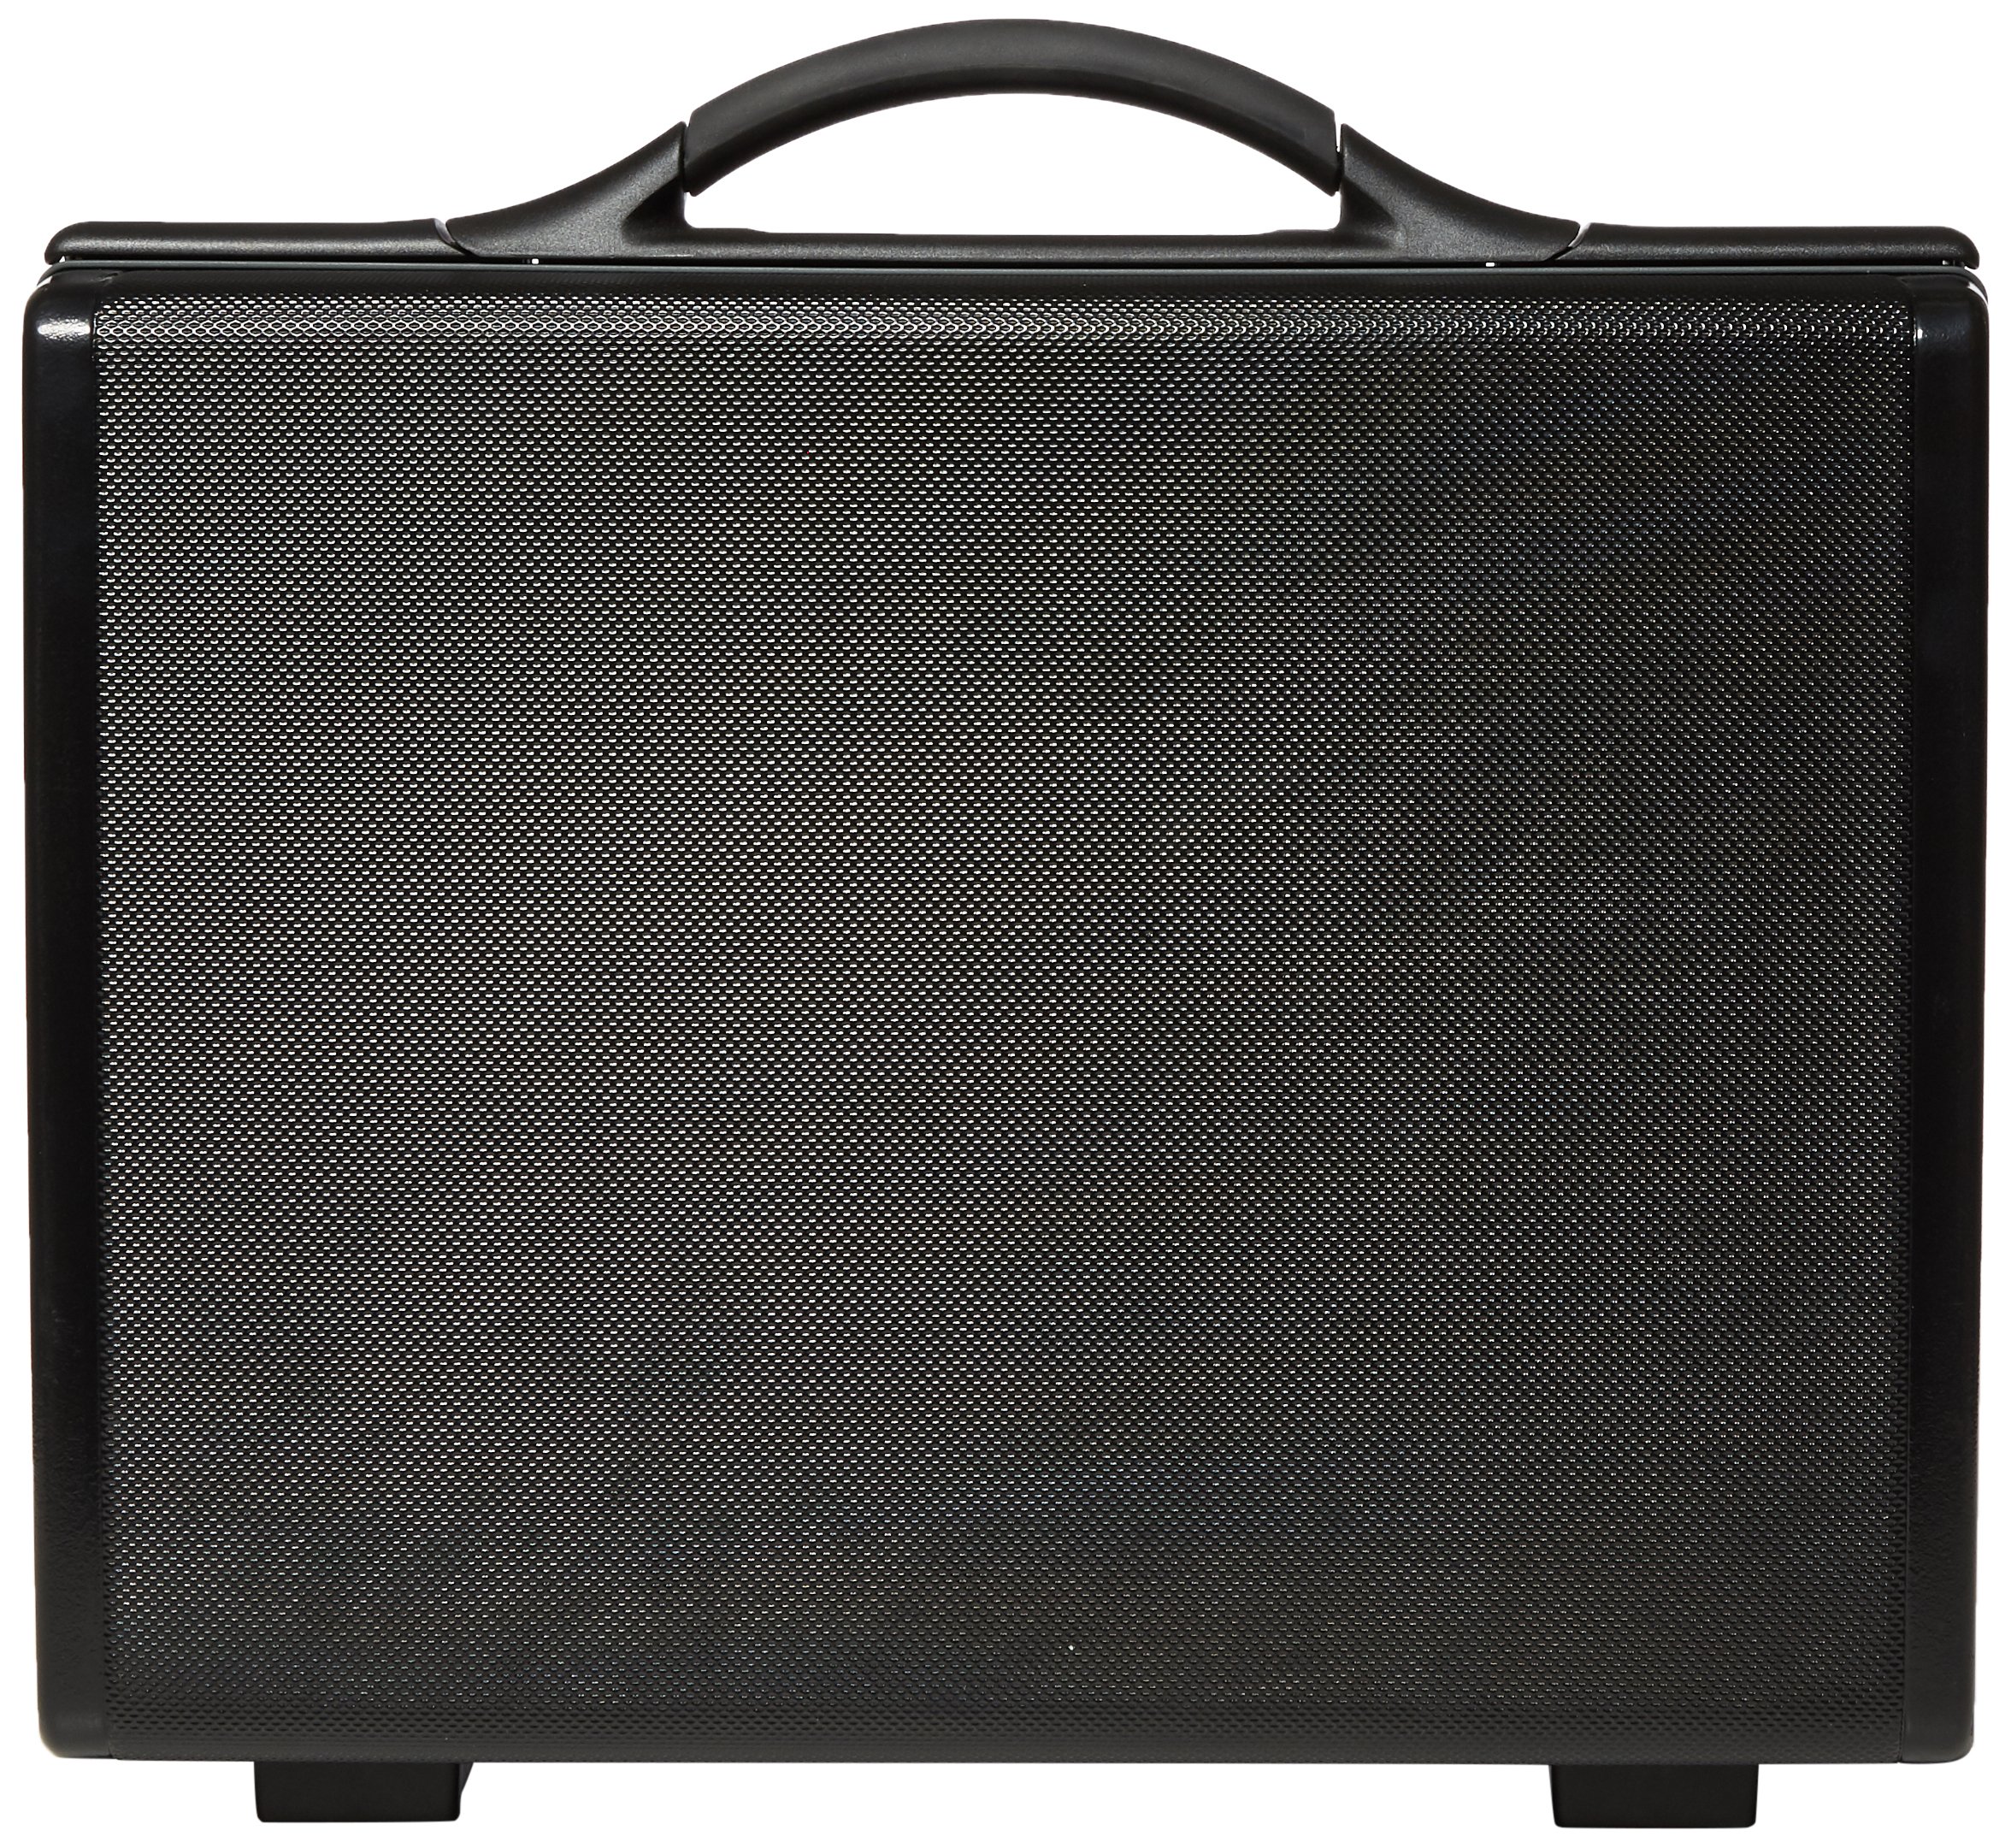 Samsonite briefcases Focus III Attache, Black, One Size